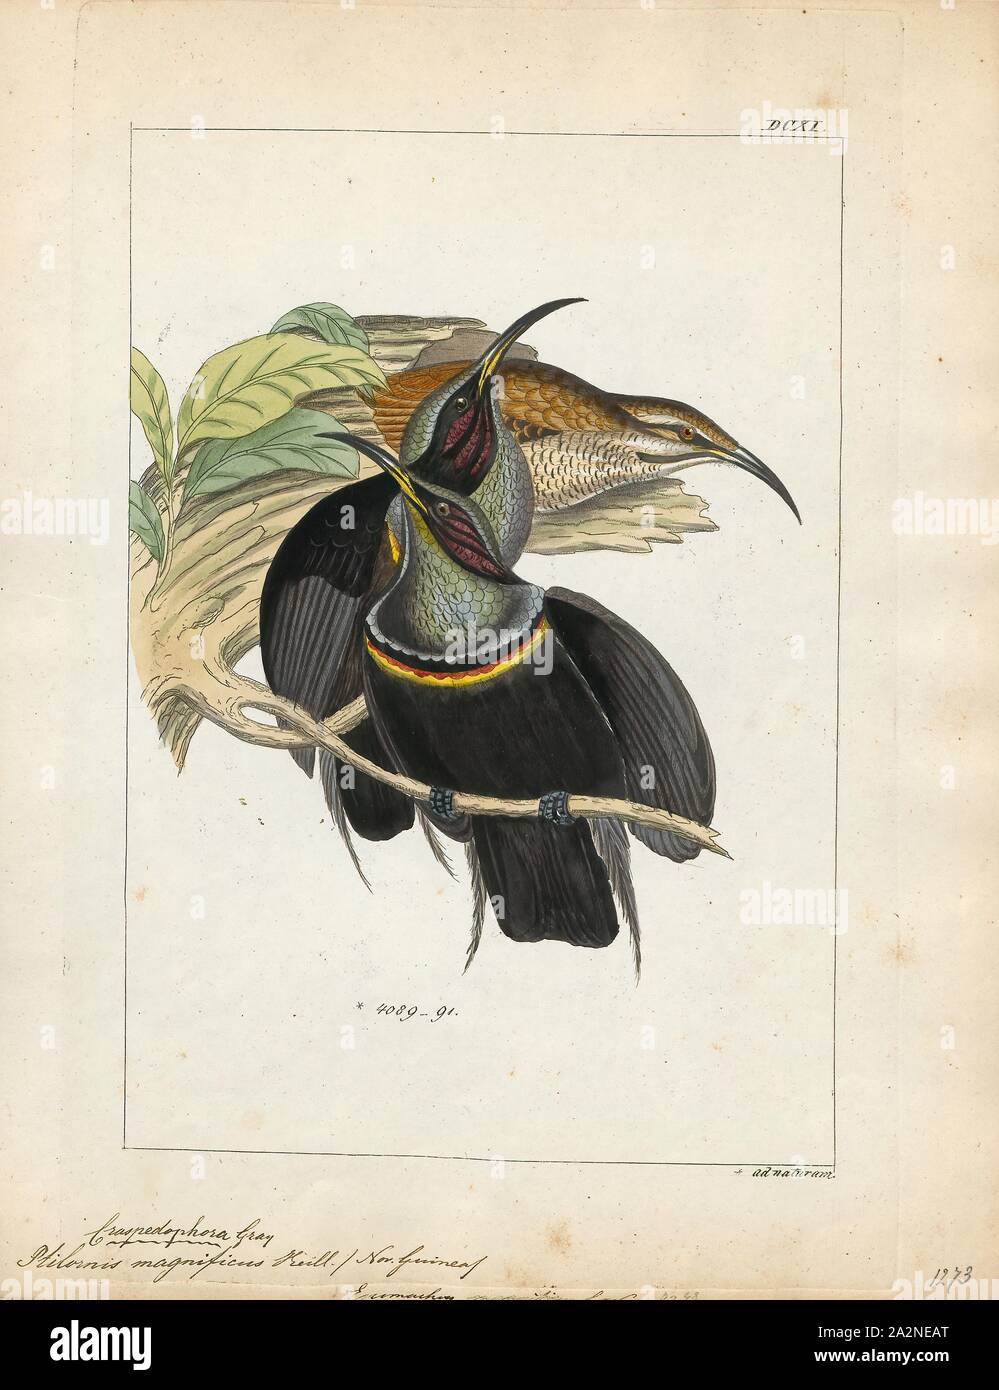 Ptilornis magnificus, Print, 1820-1860 Stock Photo